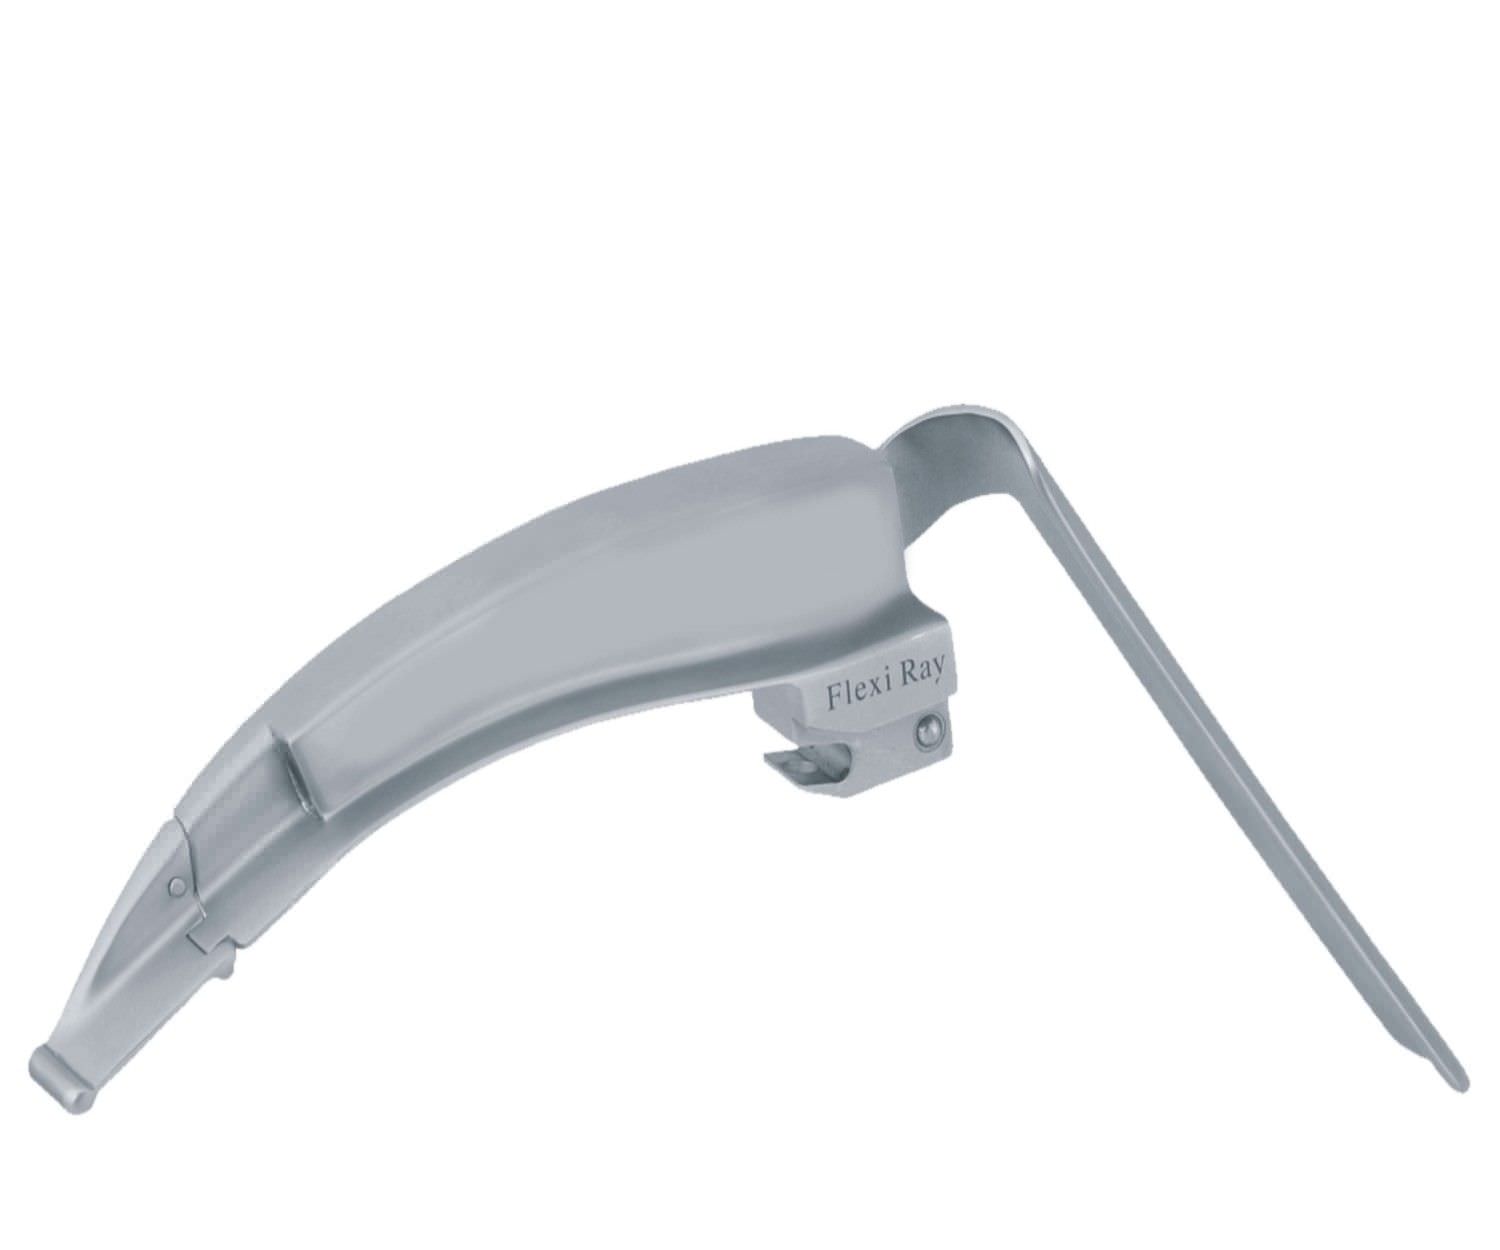 Macintosh laryngoscope blade / with flexible tip / fiber optic FLEXI RAY Haymed